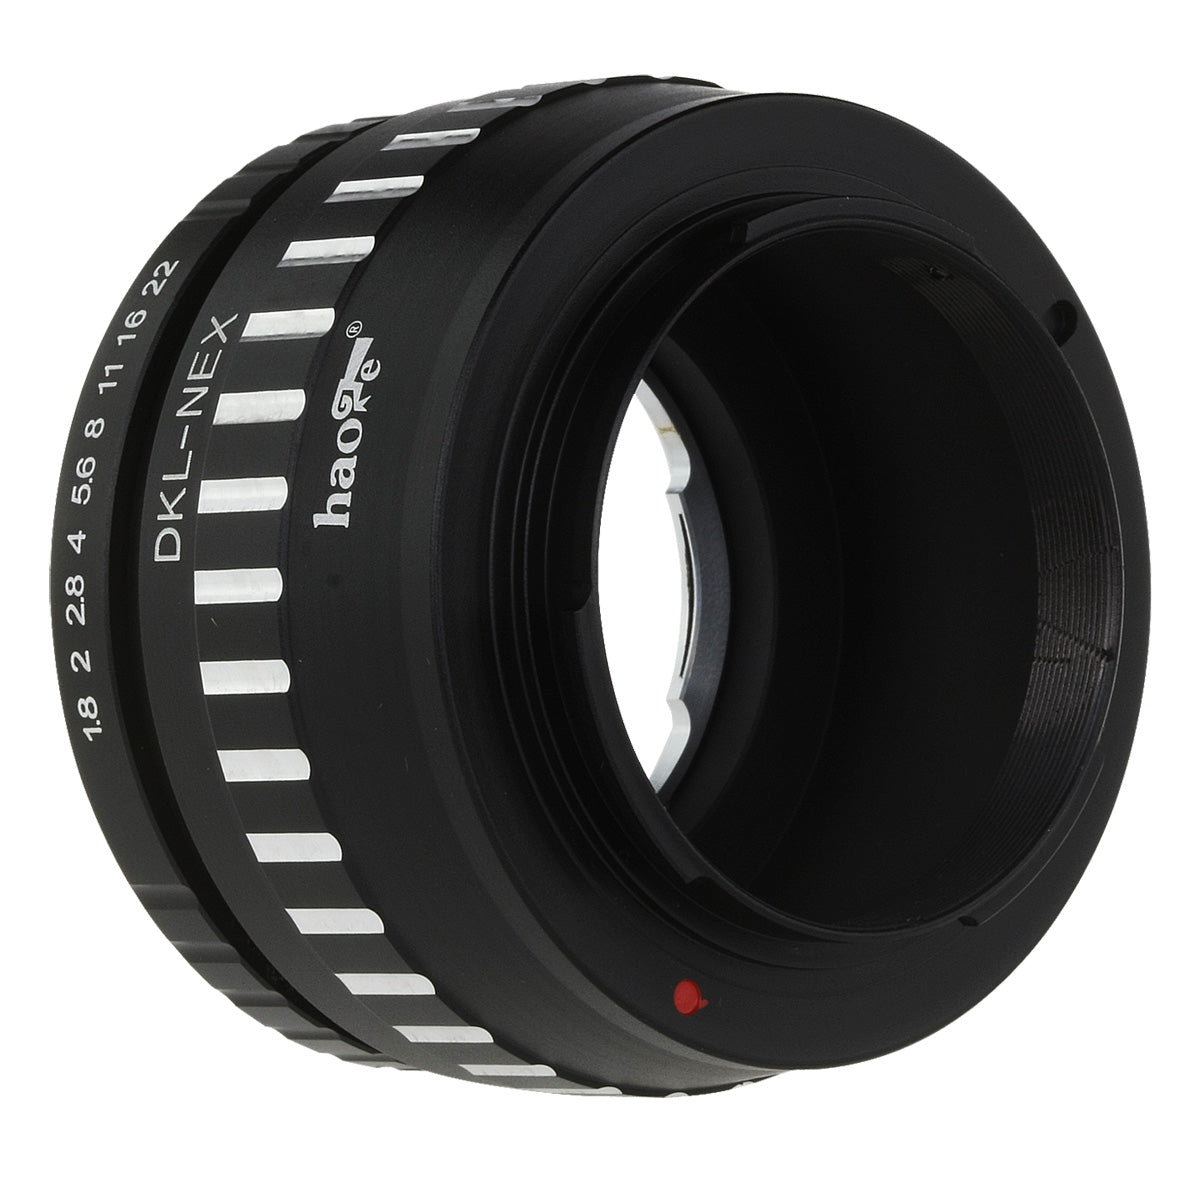 Haoge Lens Mount Adapter for Voigtlander Retina DKL mount Lens to Sony E-mount NEX Camera such as NEX-3, NEX-5, NEX-5N, NEX-7, NEX-7N, NEX-C3, NEX-F3, a6300, a6000, a5000, a3500, a3000, NEX-VG10, VG20